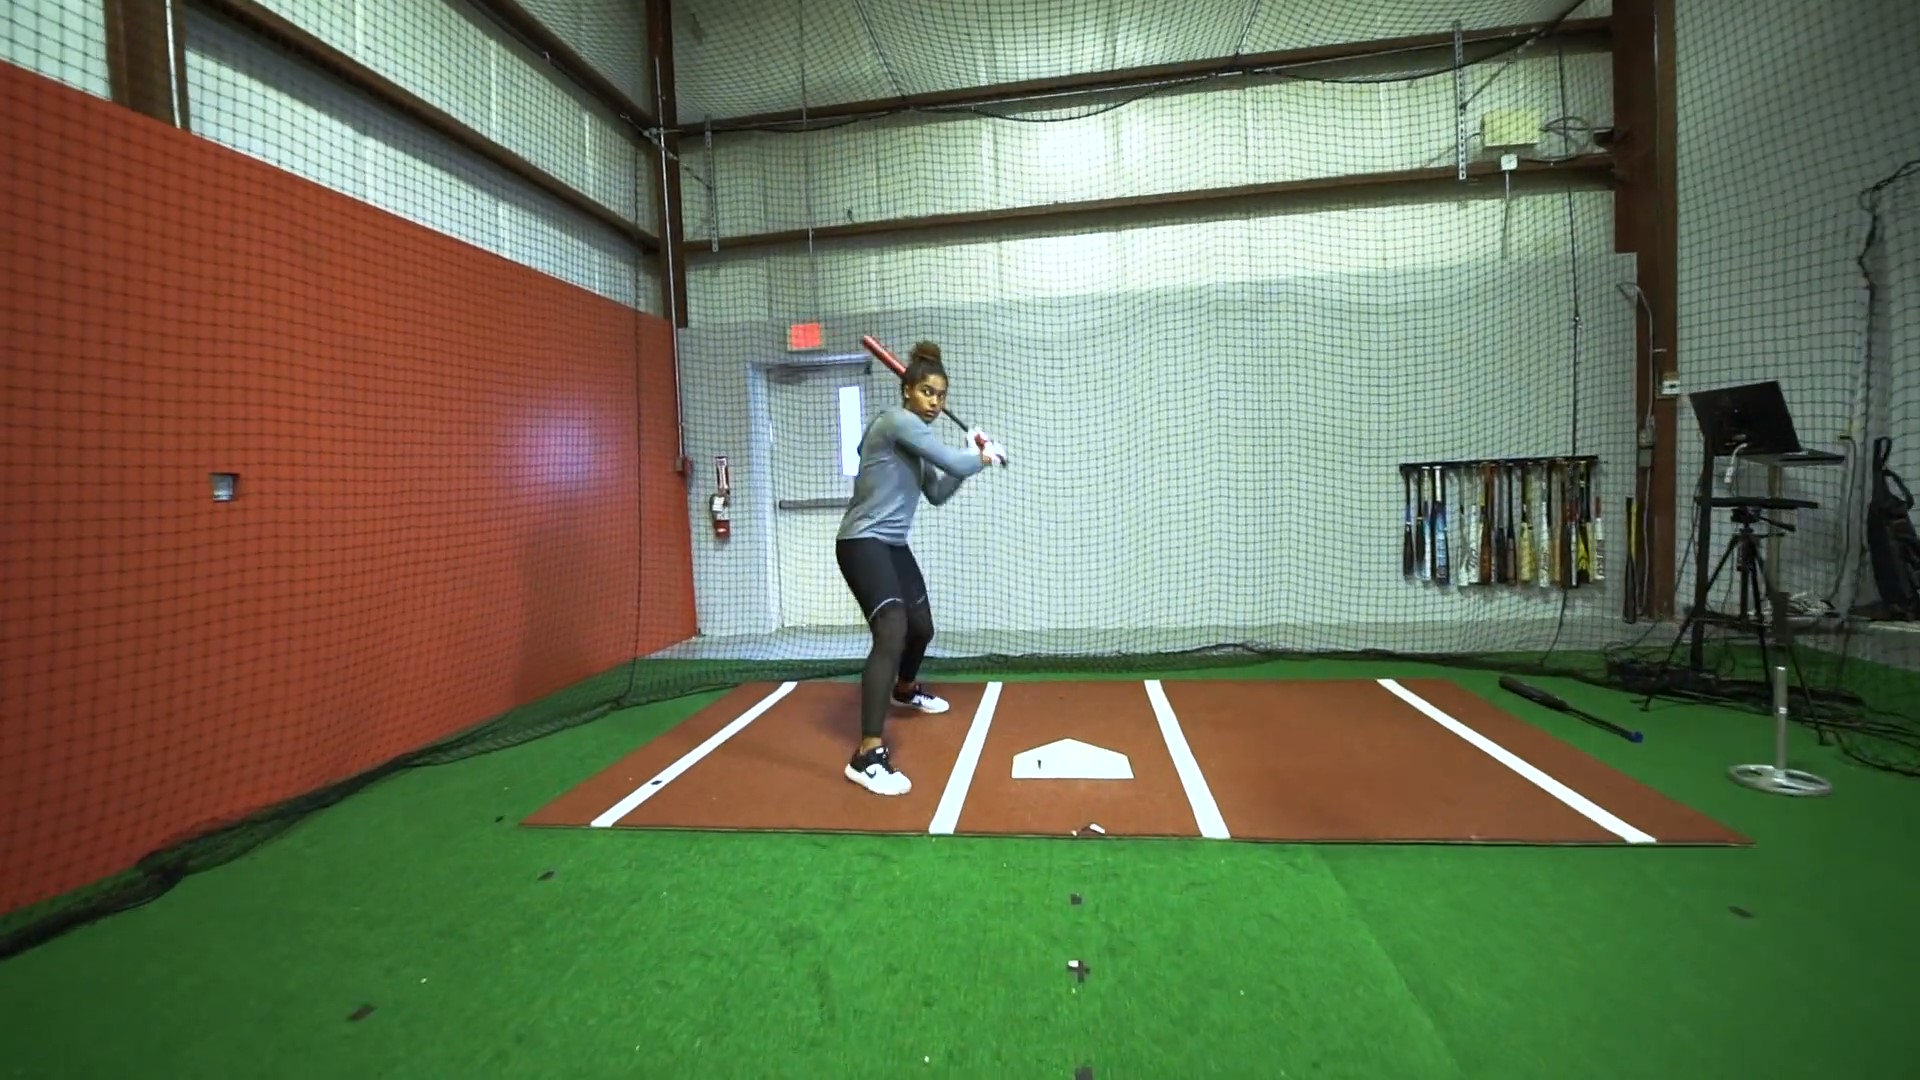 Best Video Camera For Baseball Swing Analysis Decorating Gingerbread Man